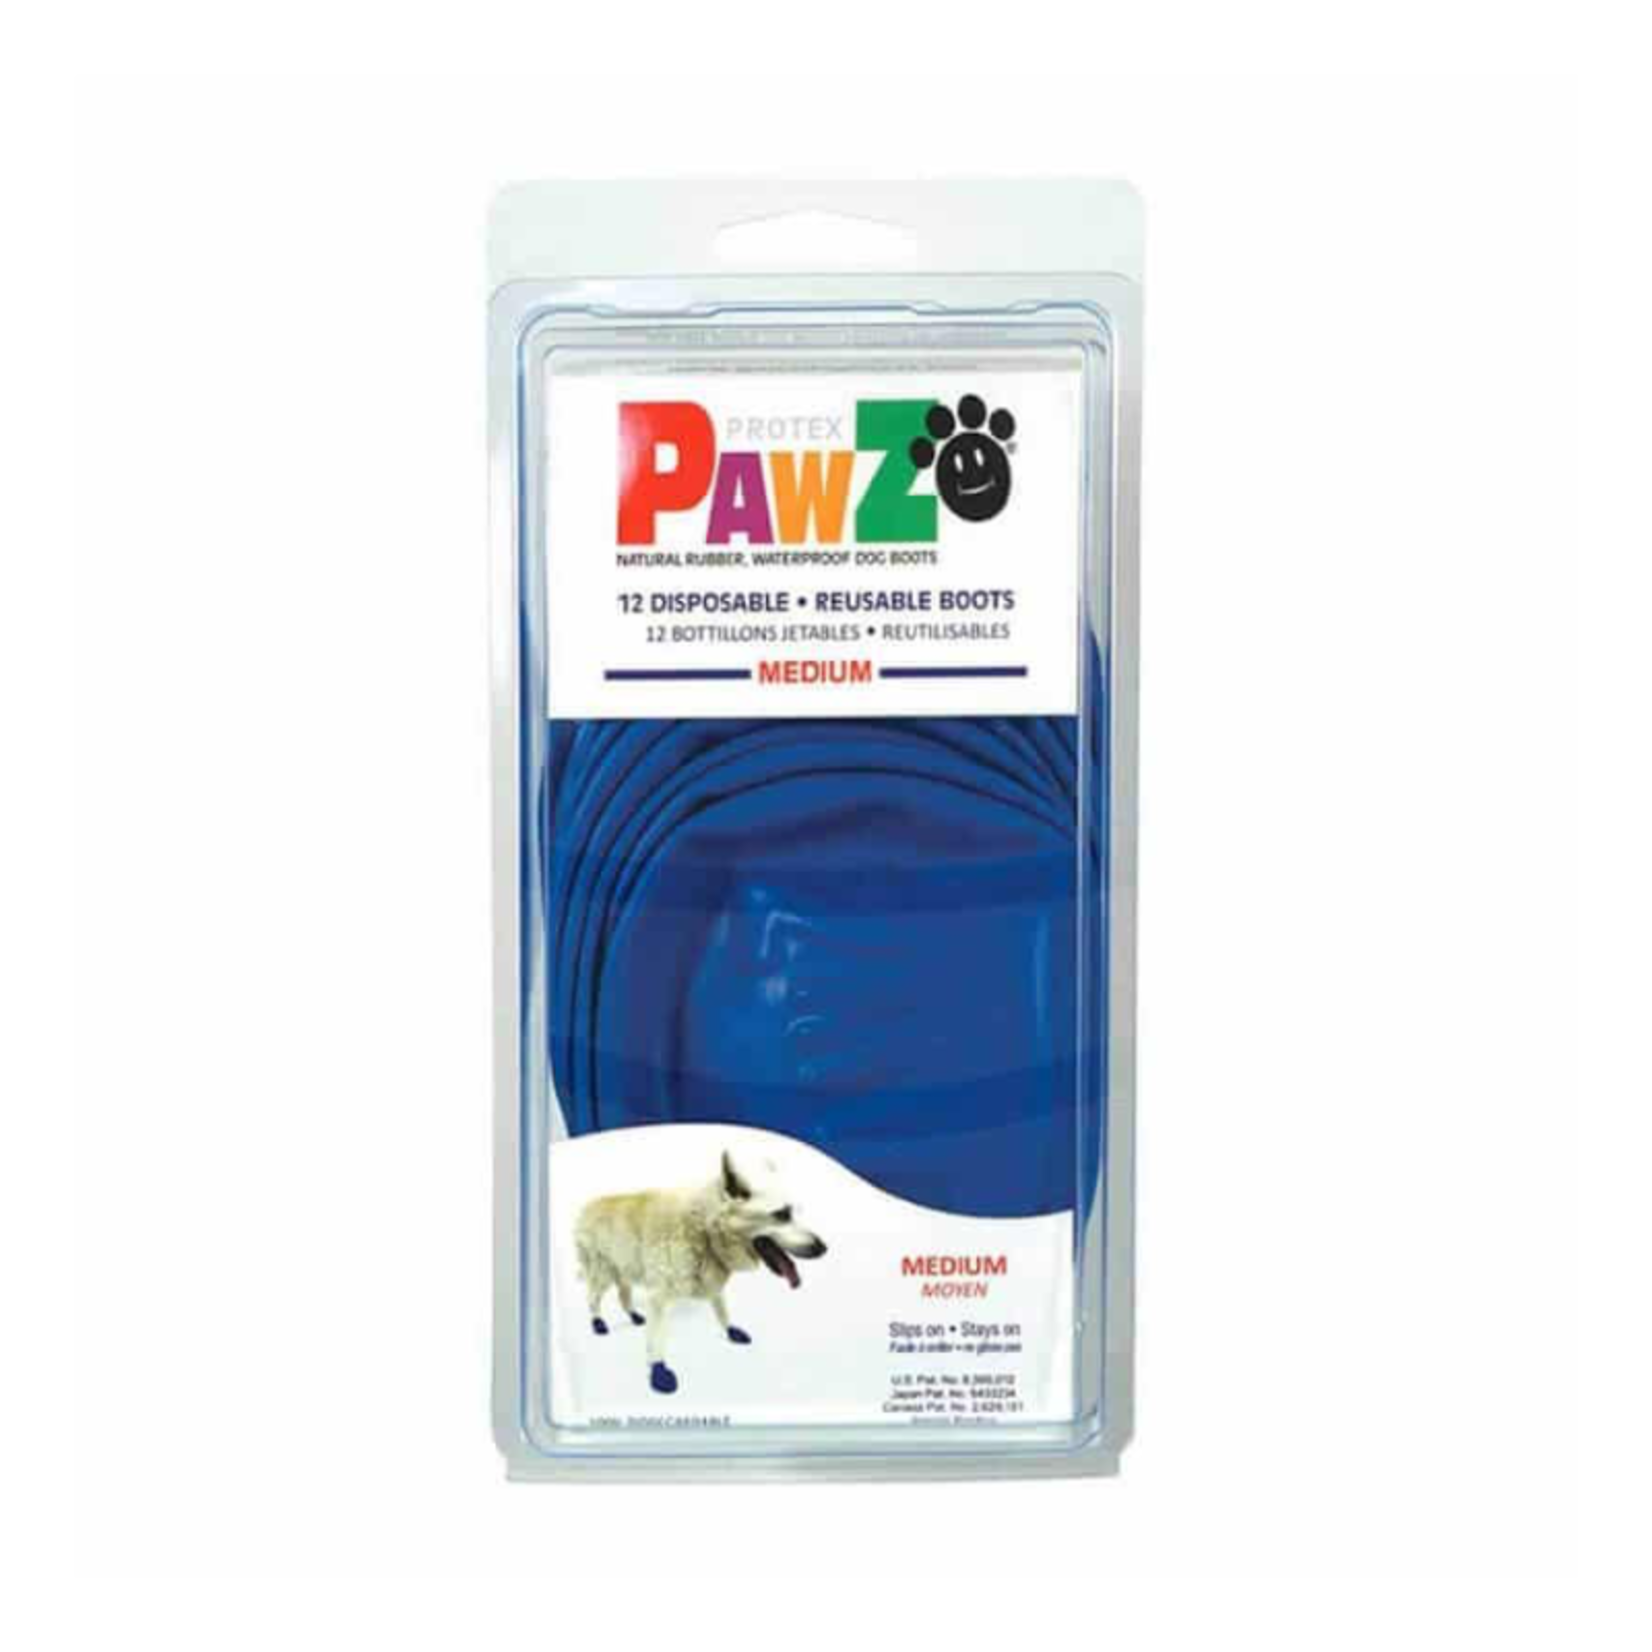 Pawz 12 ct. - Disposable & Reusable Waterproof Dog Boots - PawZ